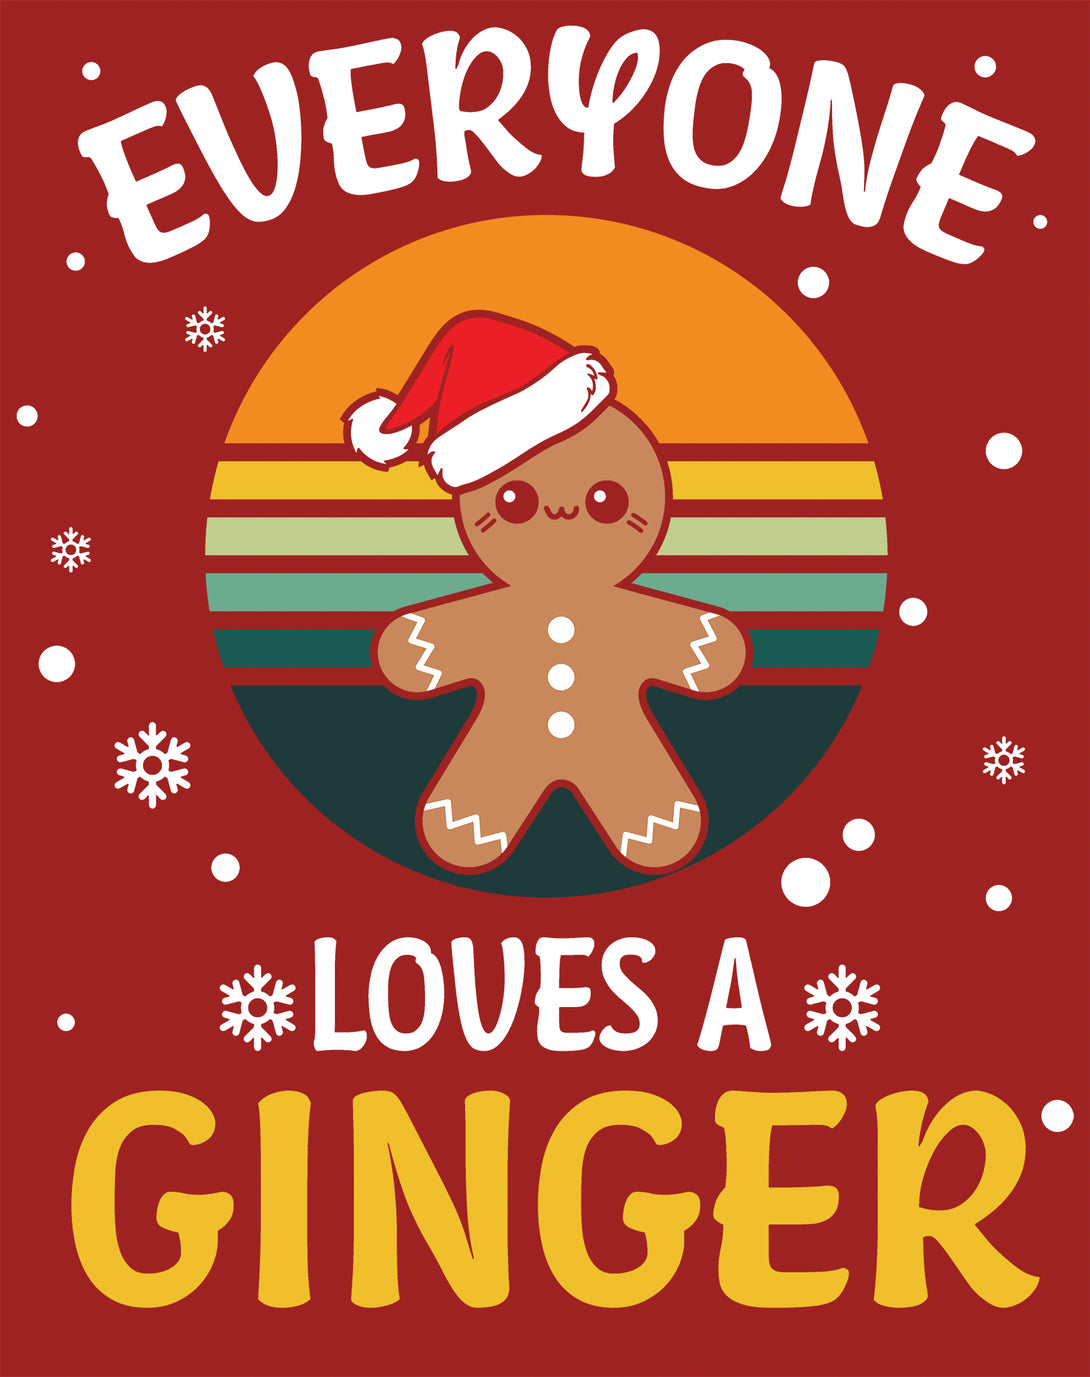 Christmas Ginger Everyone Loves Meme Fun Gingerbread Man Lol Women's T-Shirt Red - Urban Species Design Close Up